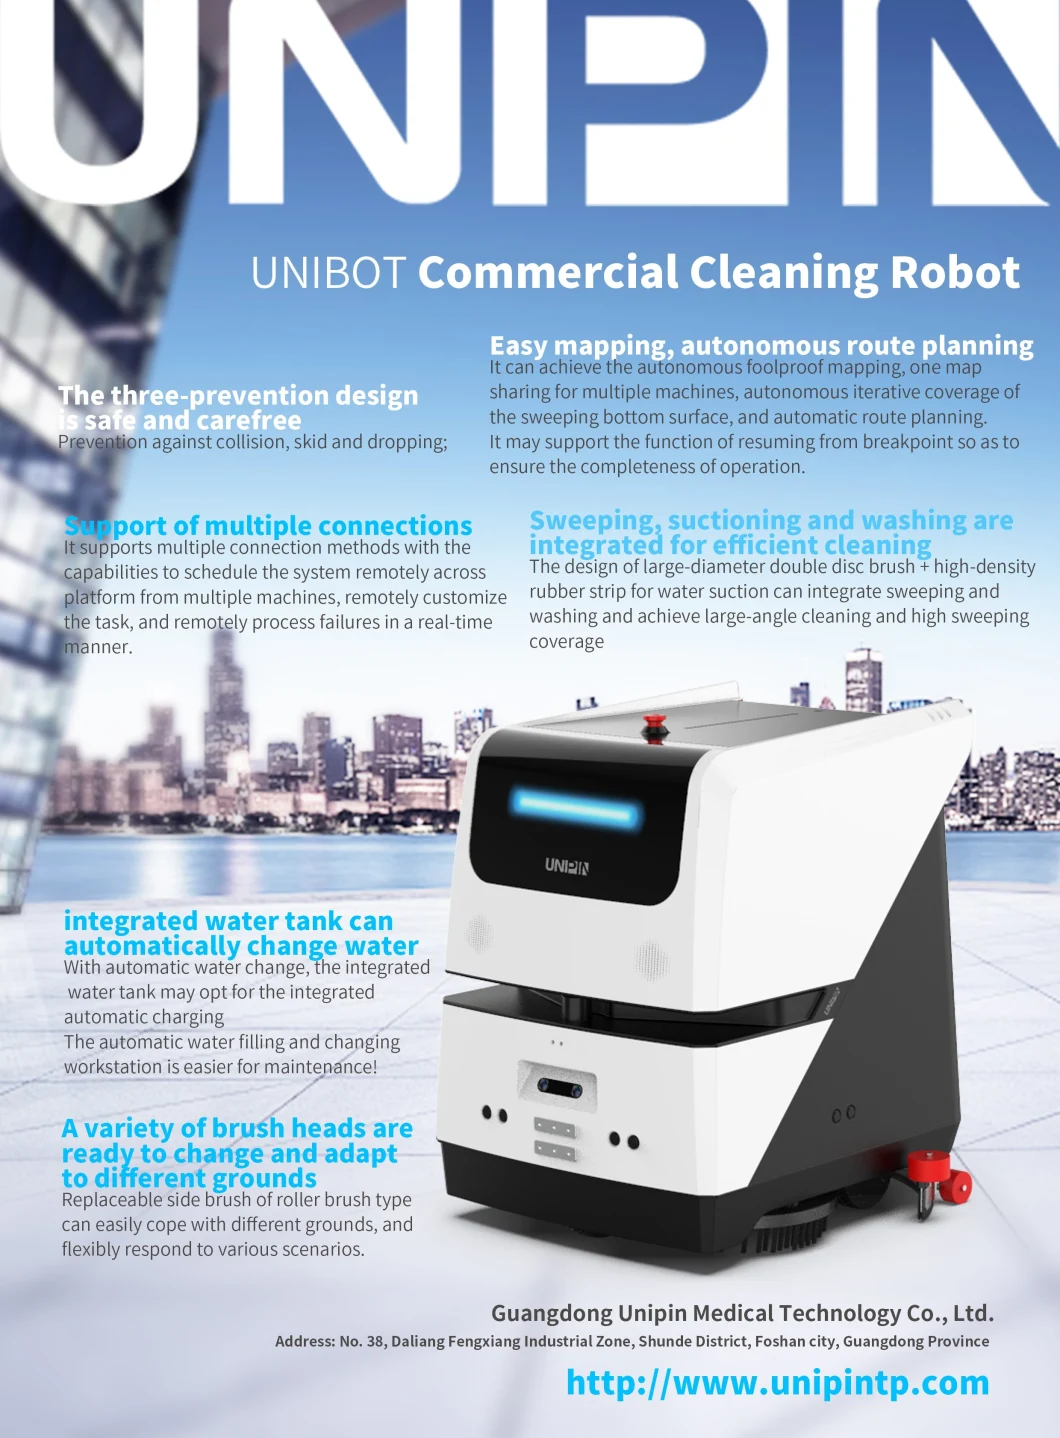 Antonomous Navigation Indoor Unmanned Cleaning Robot Hard Floor to Carpet Cleaning